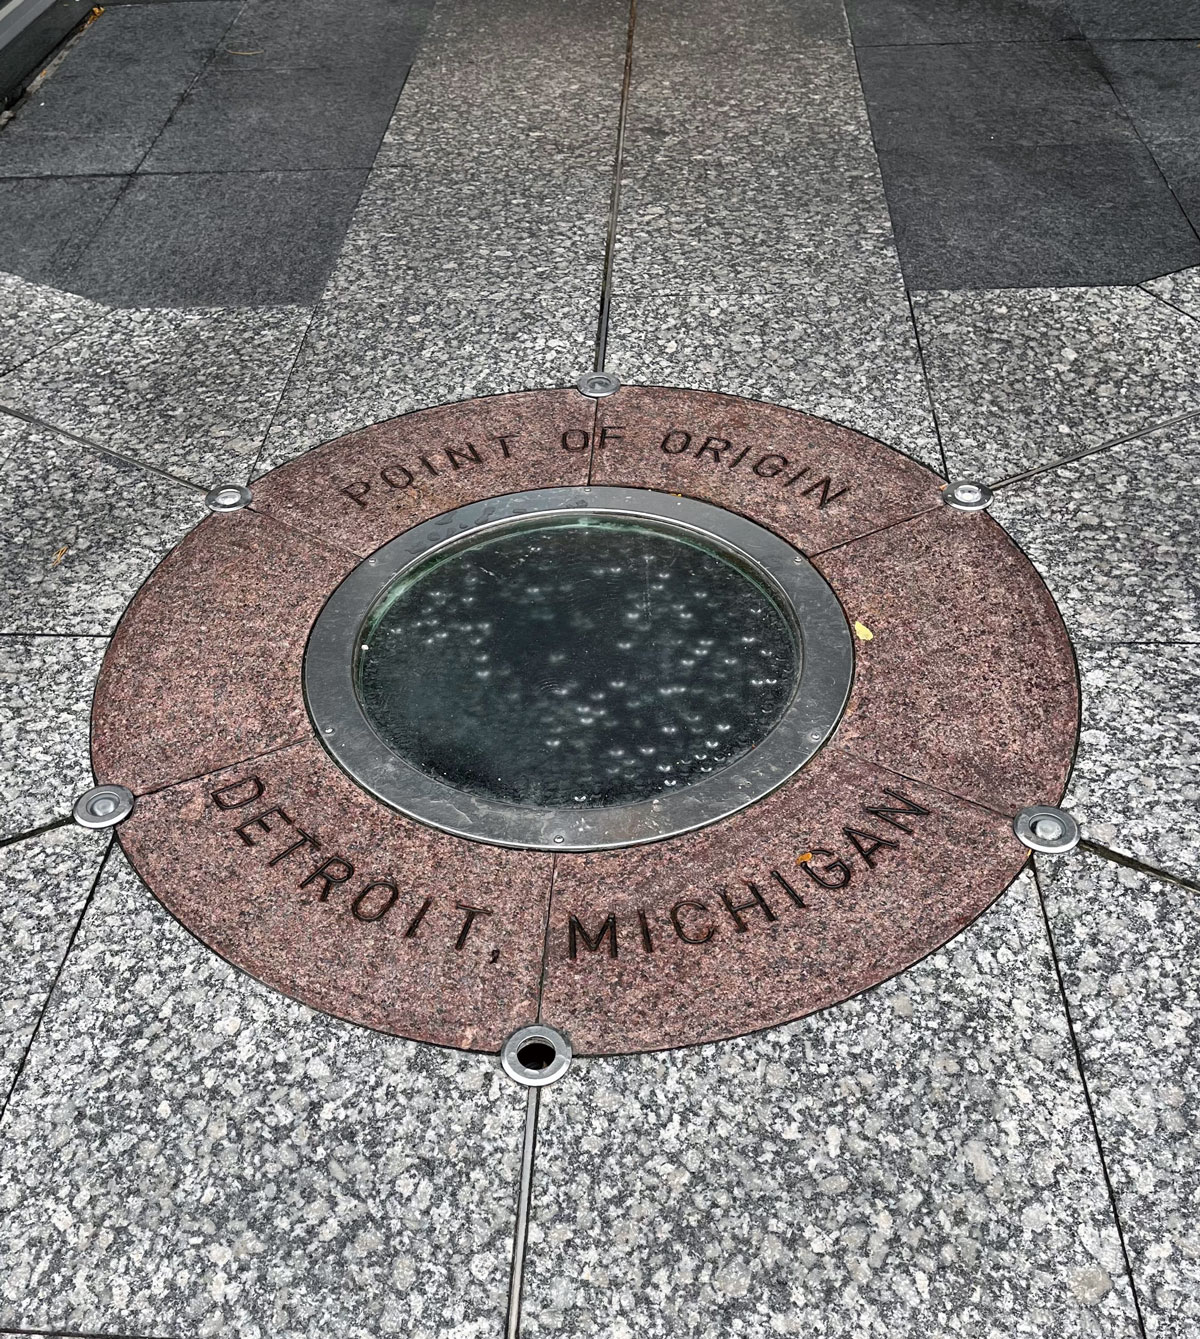 'Point of origin marker in Detroit.